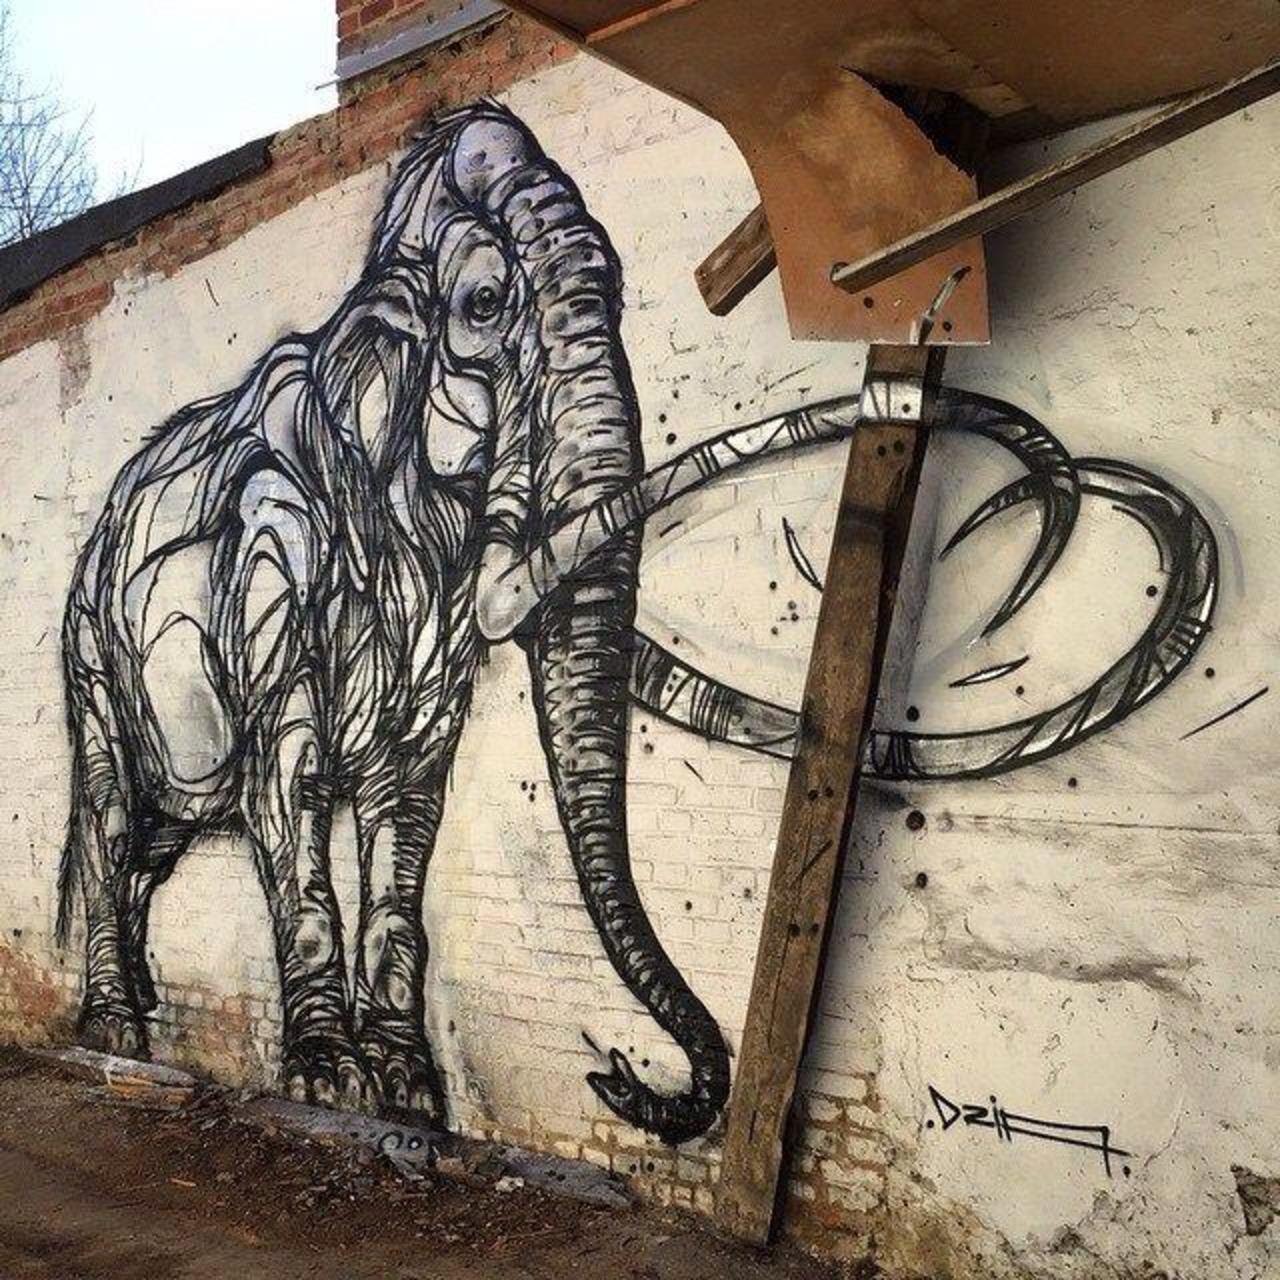 Mammoth. New nature in Street Art wall by DZIA 

#art #graffiti #mural #streetart http://t.co/x0AVbNw4bn